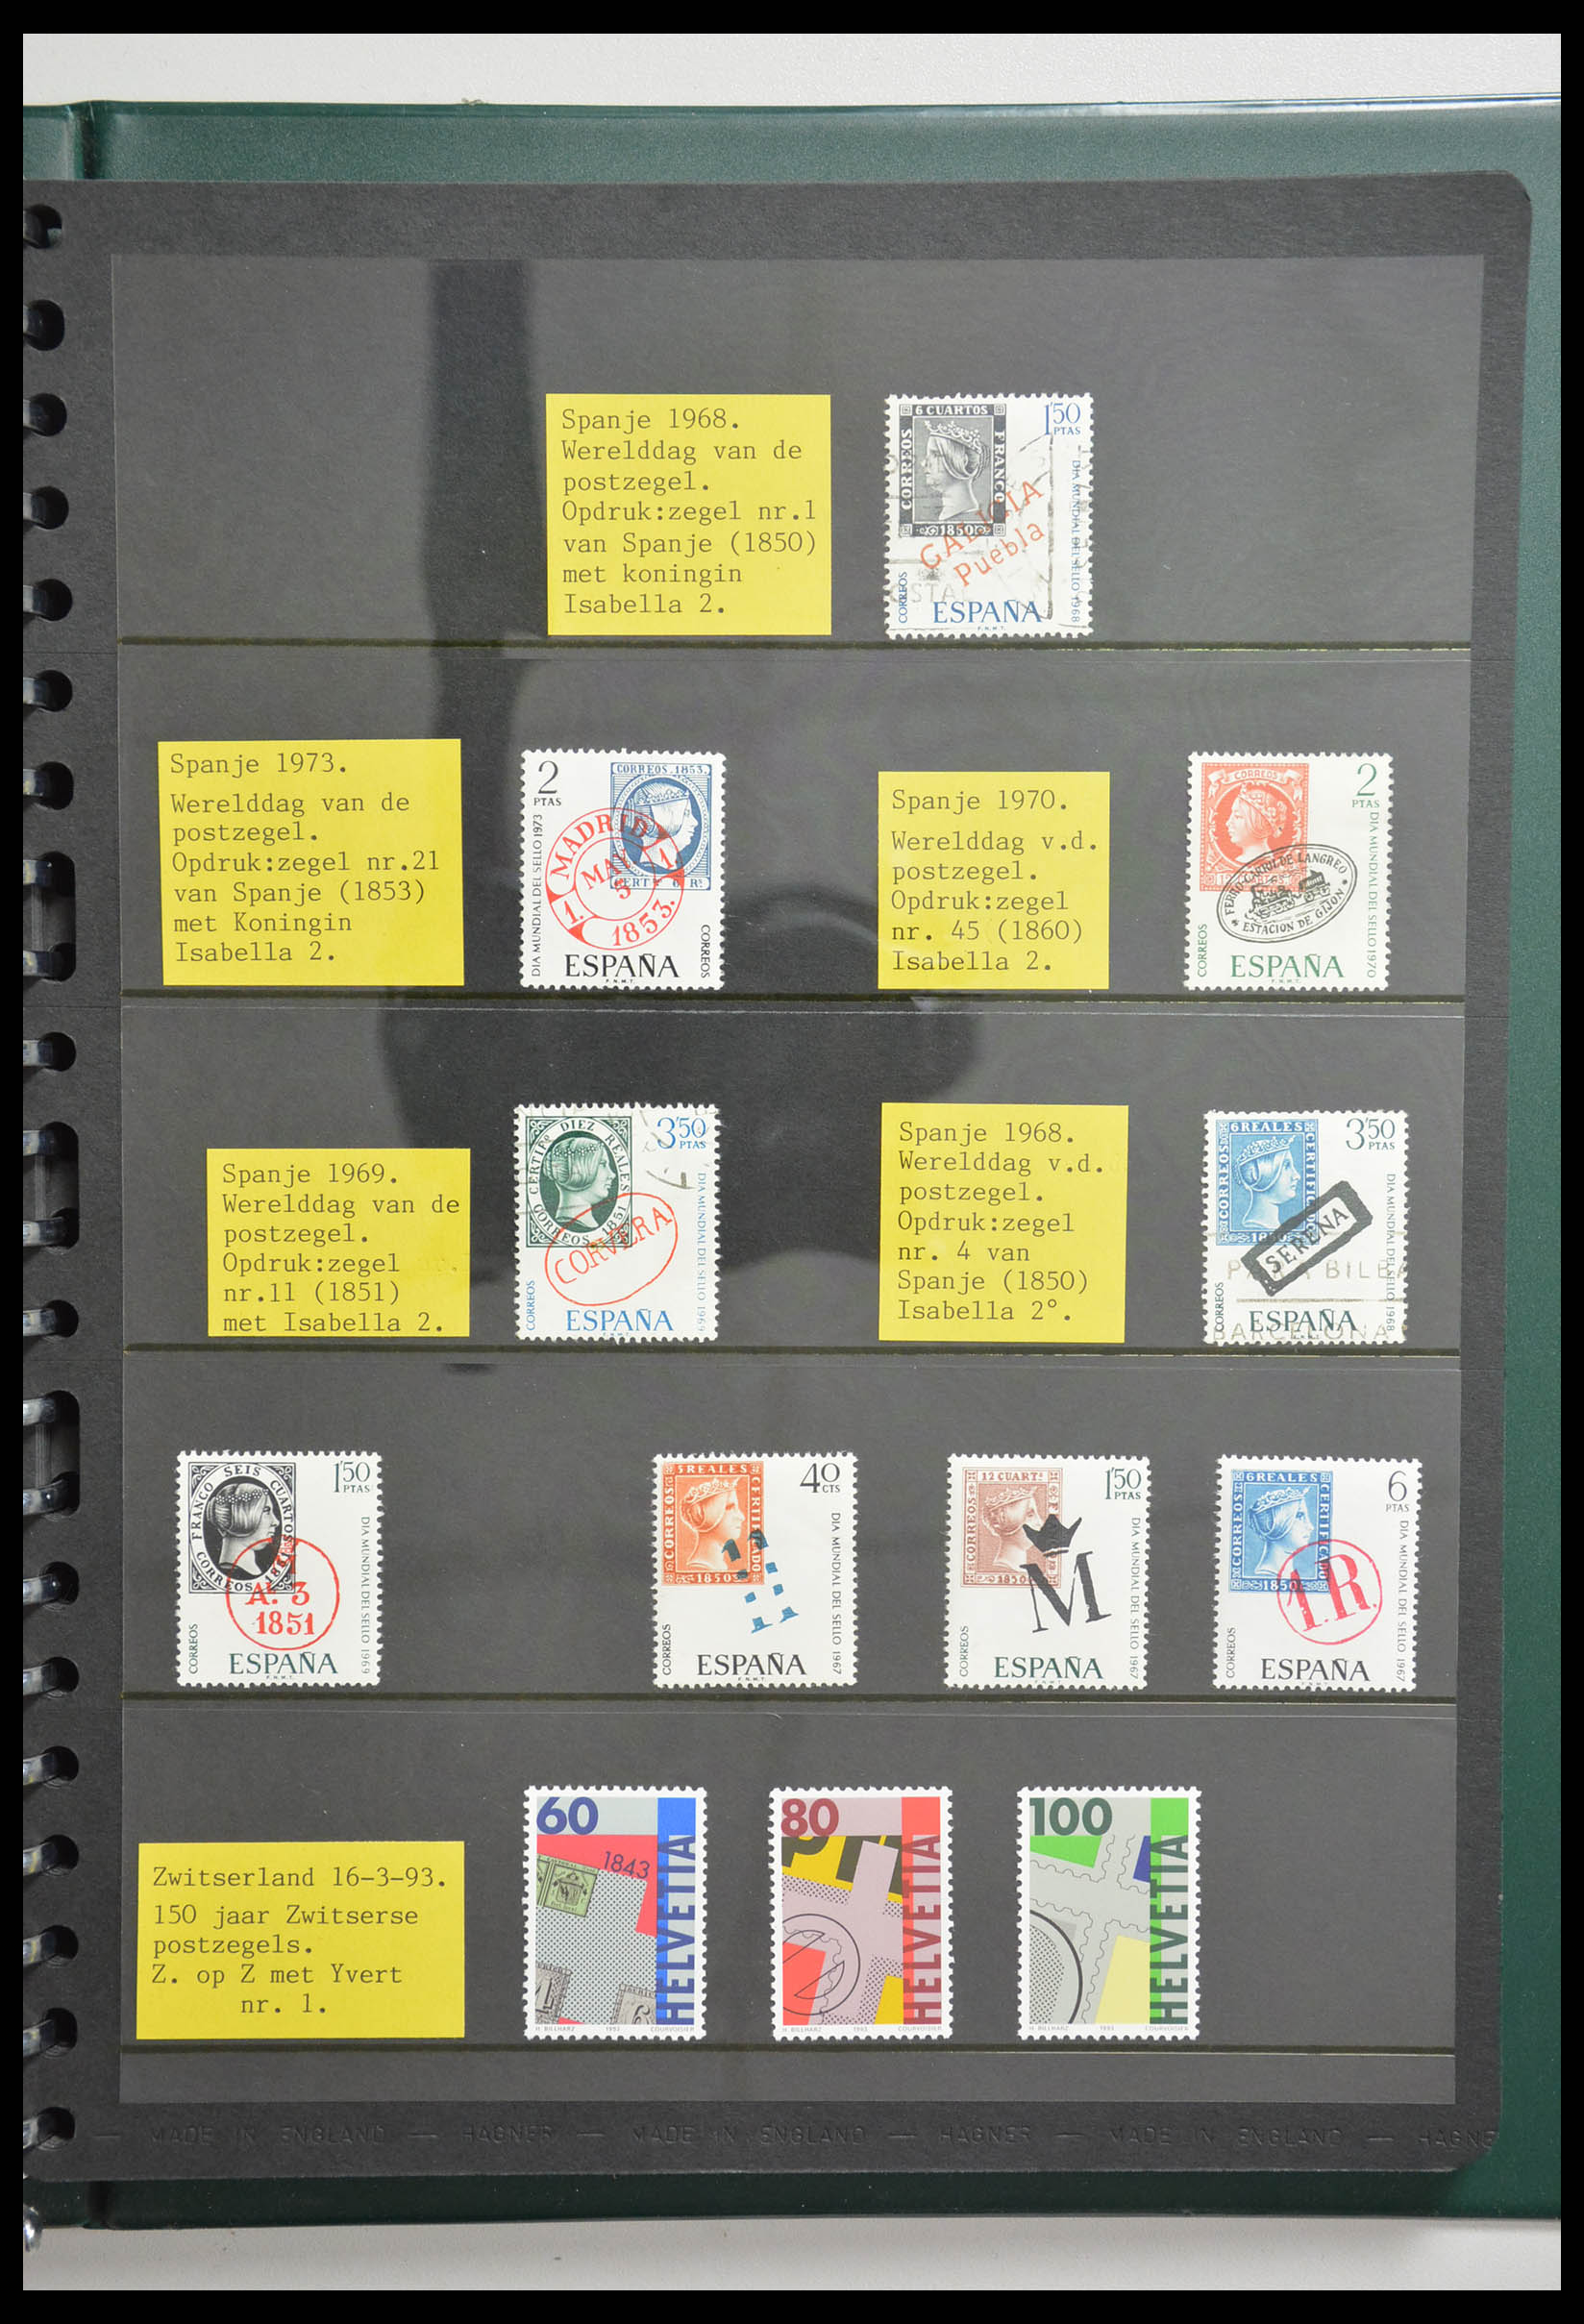 28337 112 - 28337 Postzegel op postzegel 1840-2001.